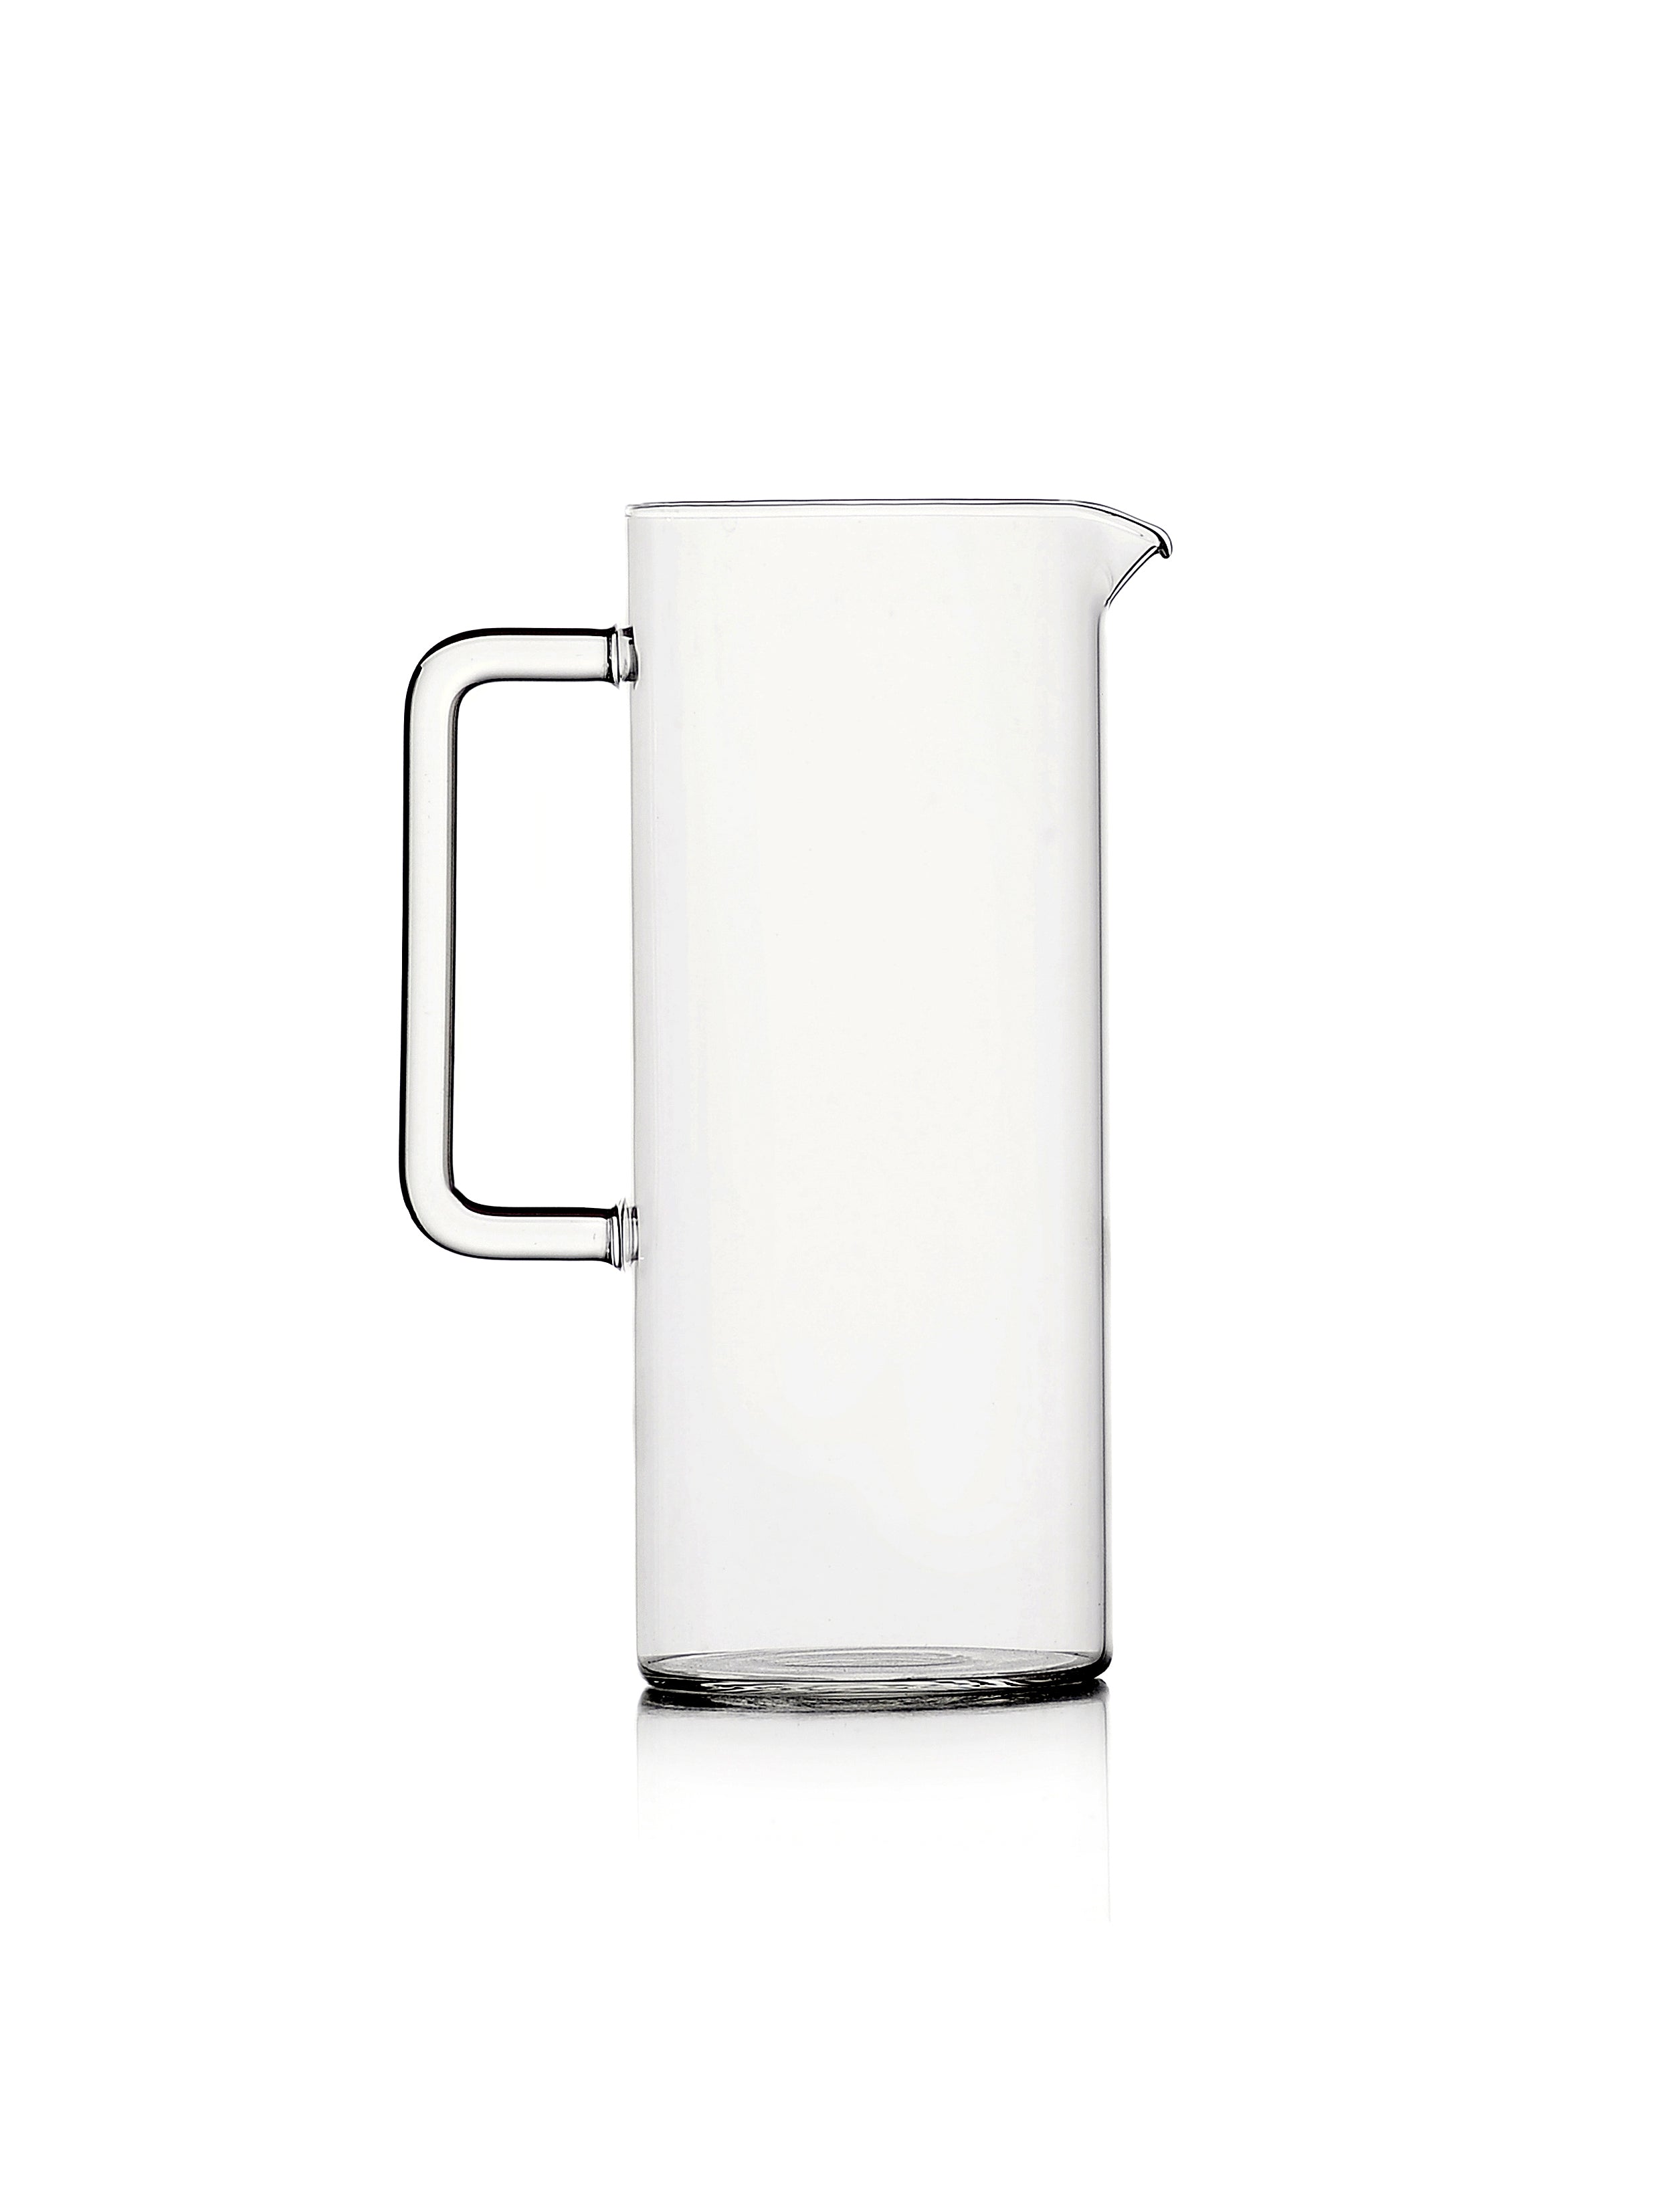 Tube glass jug with handle